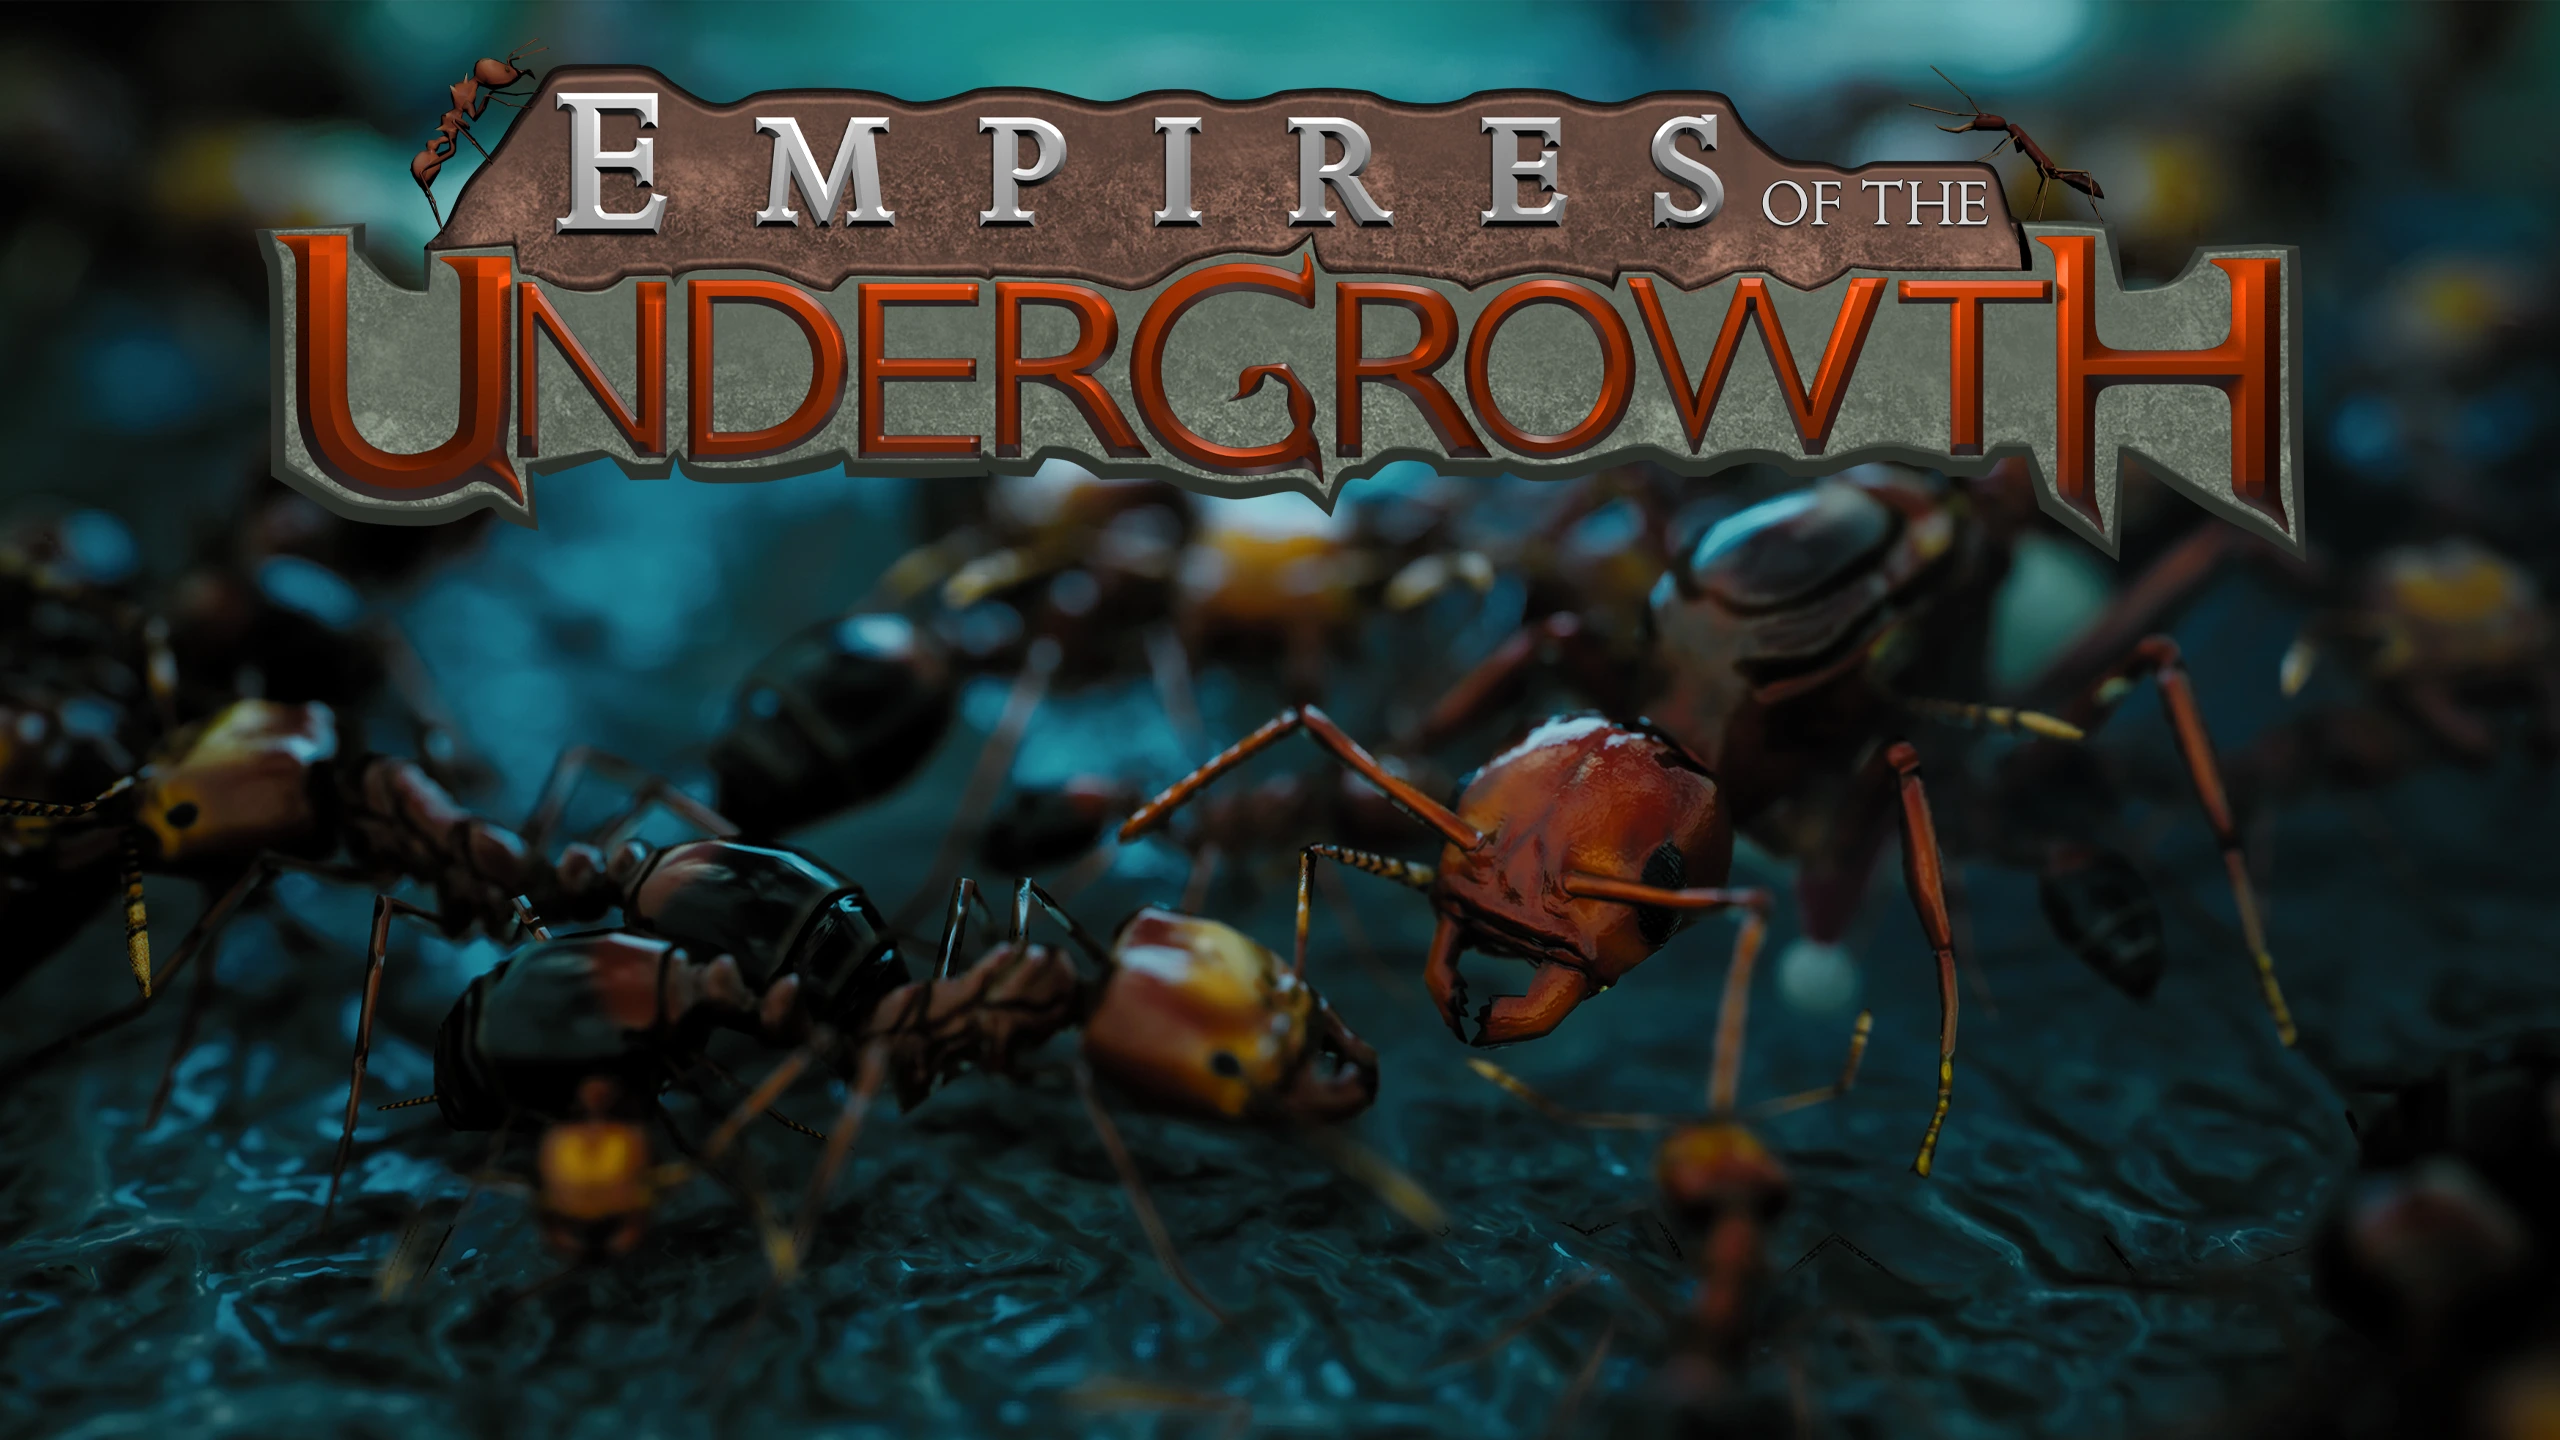 EmpiresoftheUndergrowth